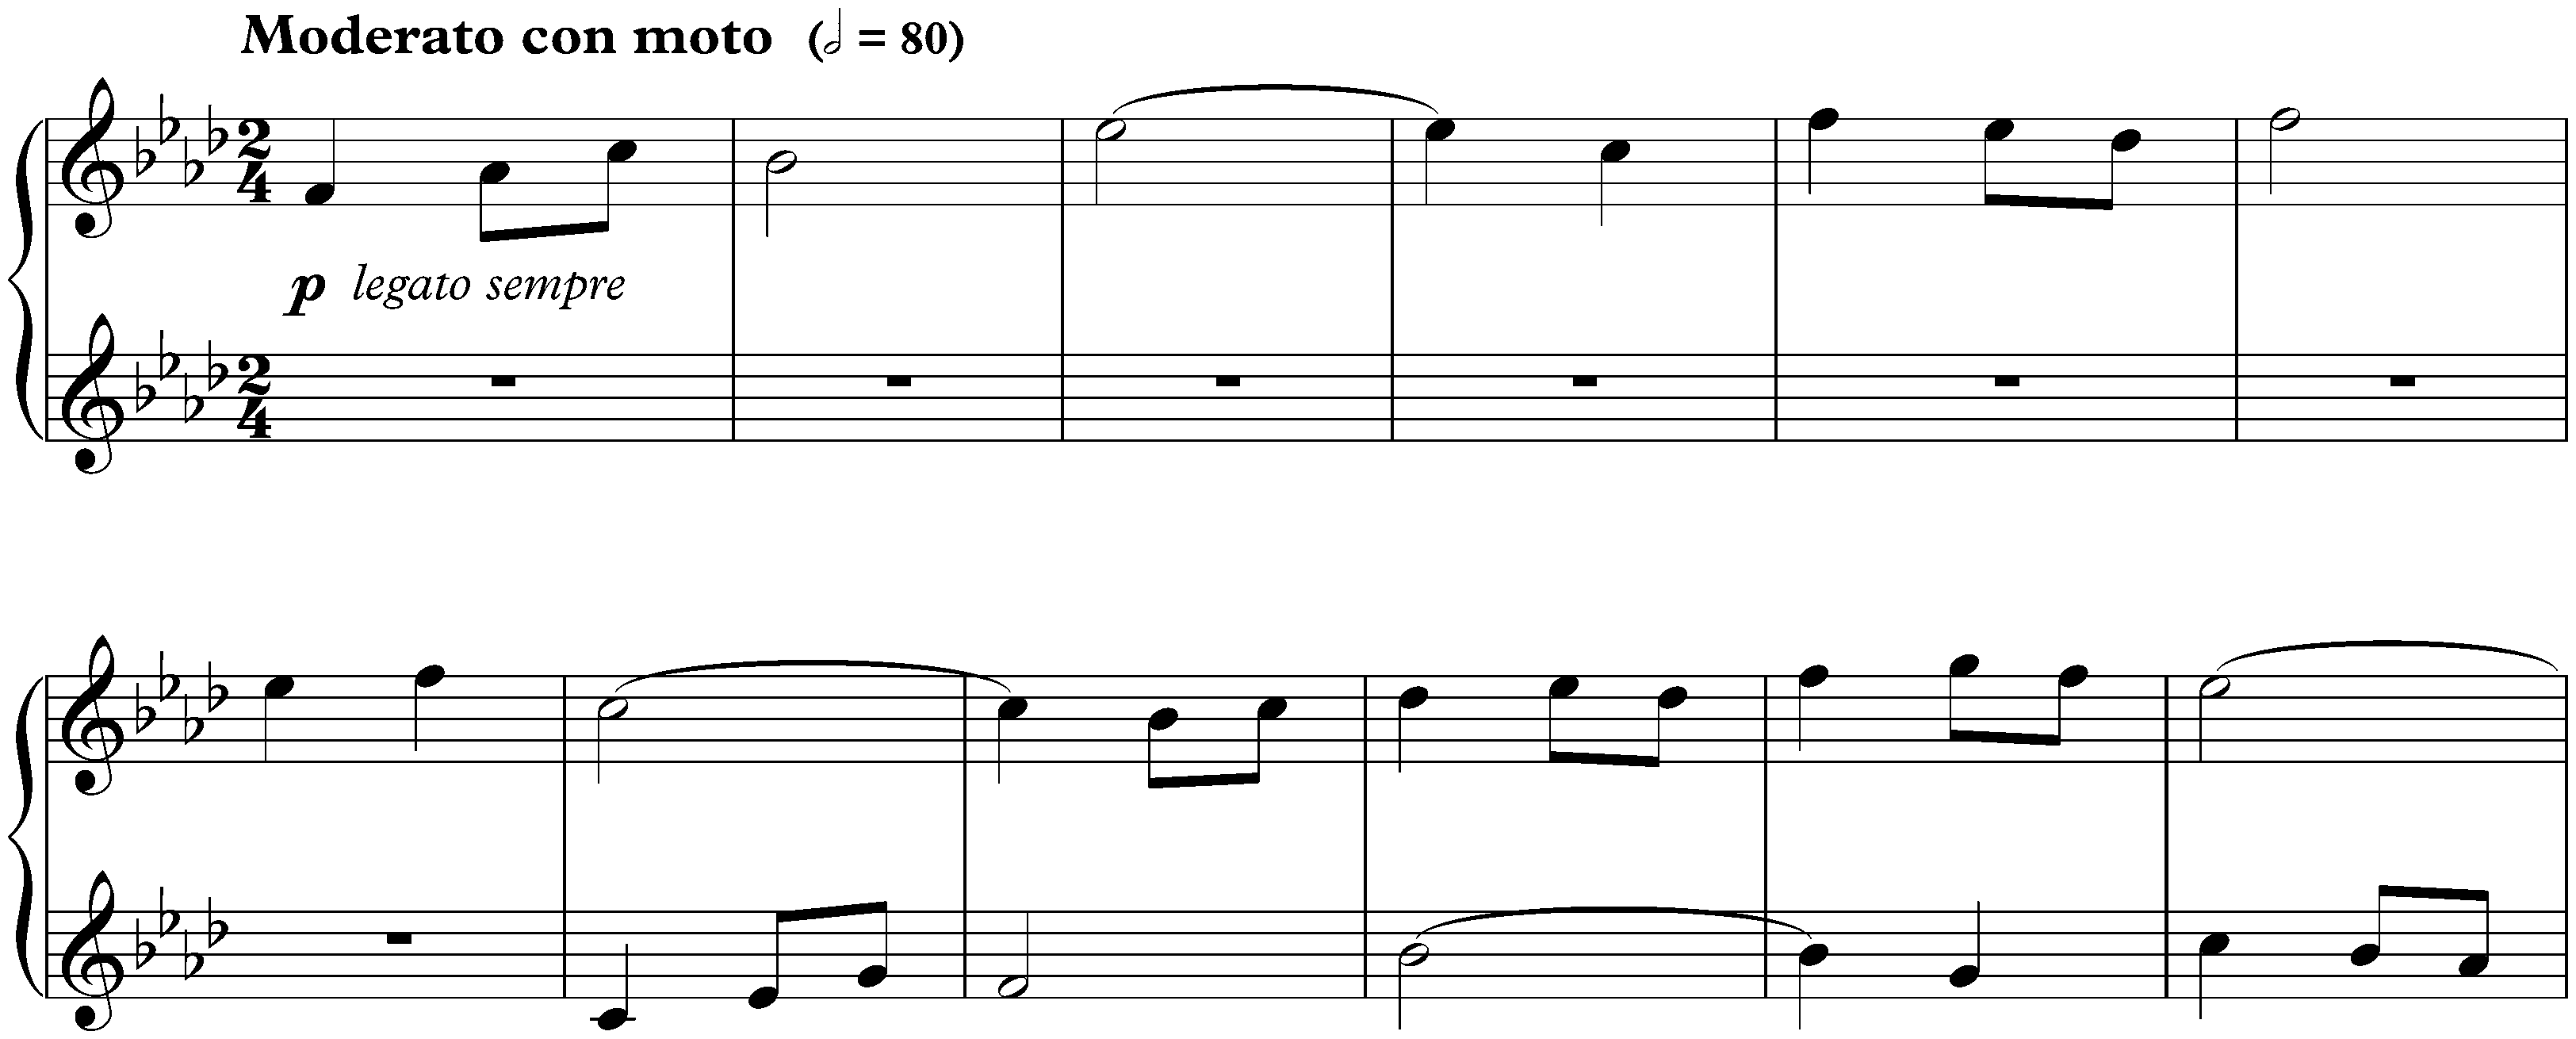 Twenty-four Preludes and Fugues, op. 87; 18. F minor, Fugue